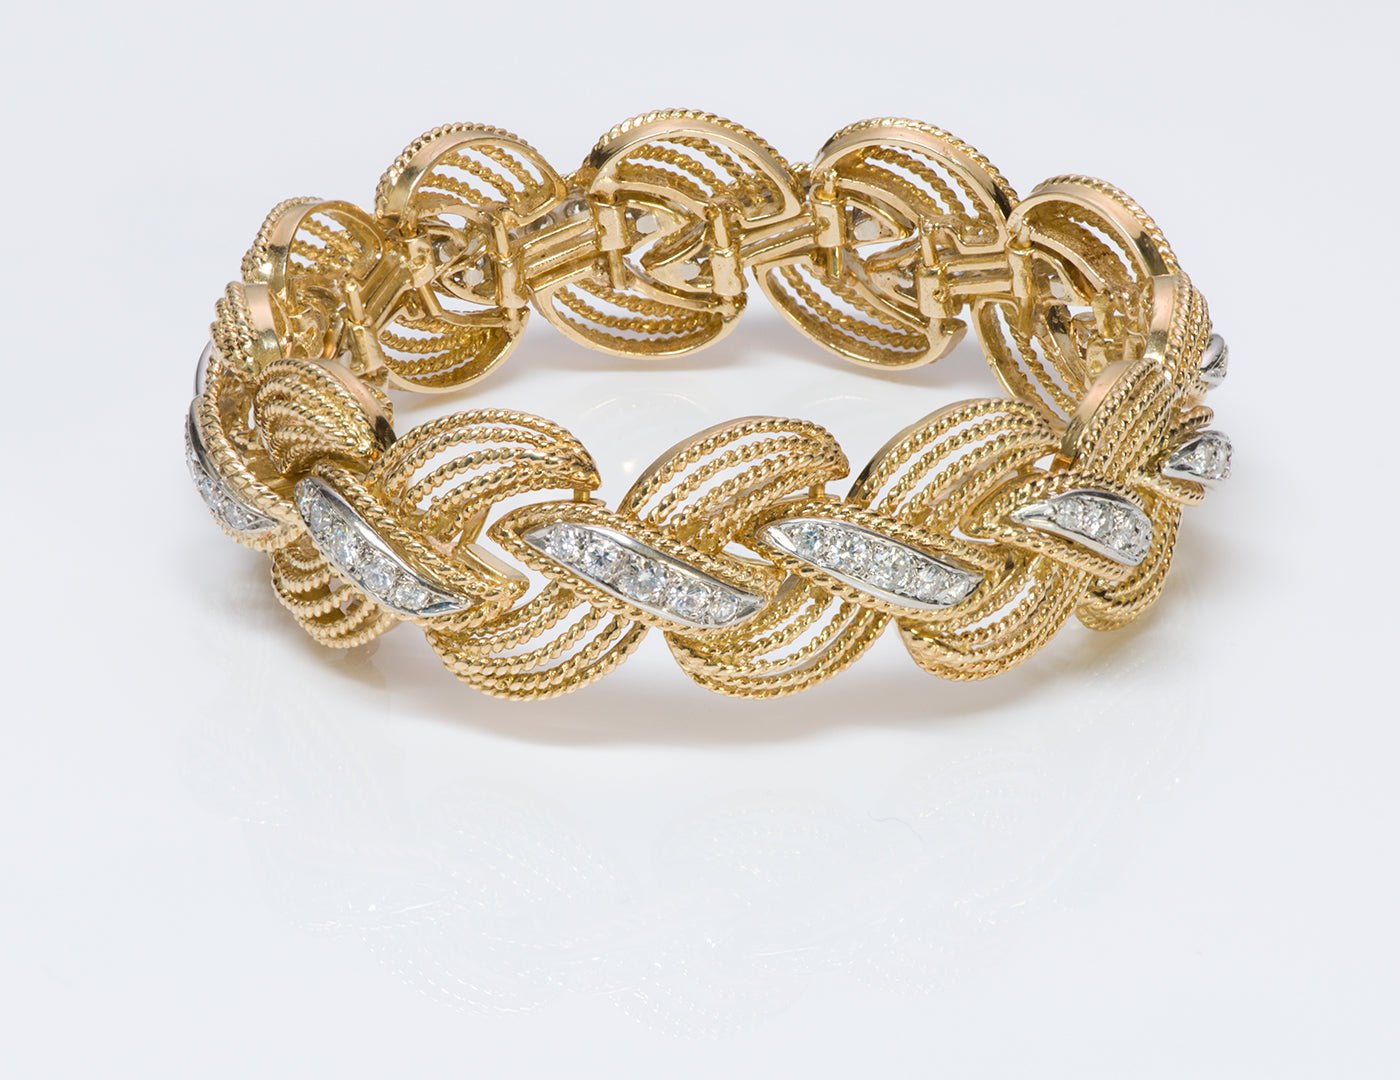 Hammerman Brothers 18K Gold Diamond Bracelet